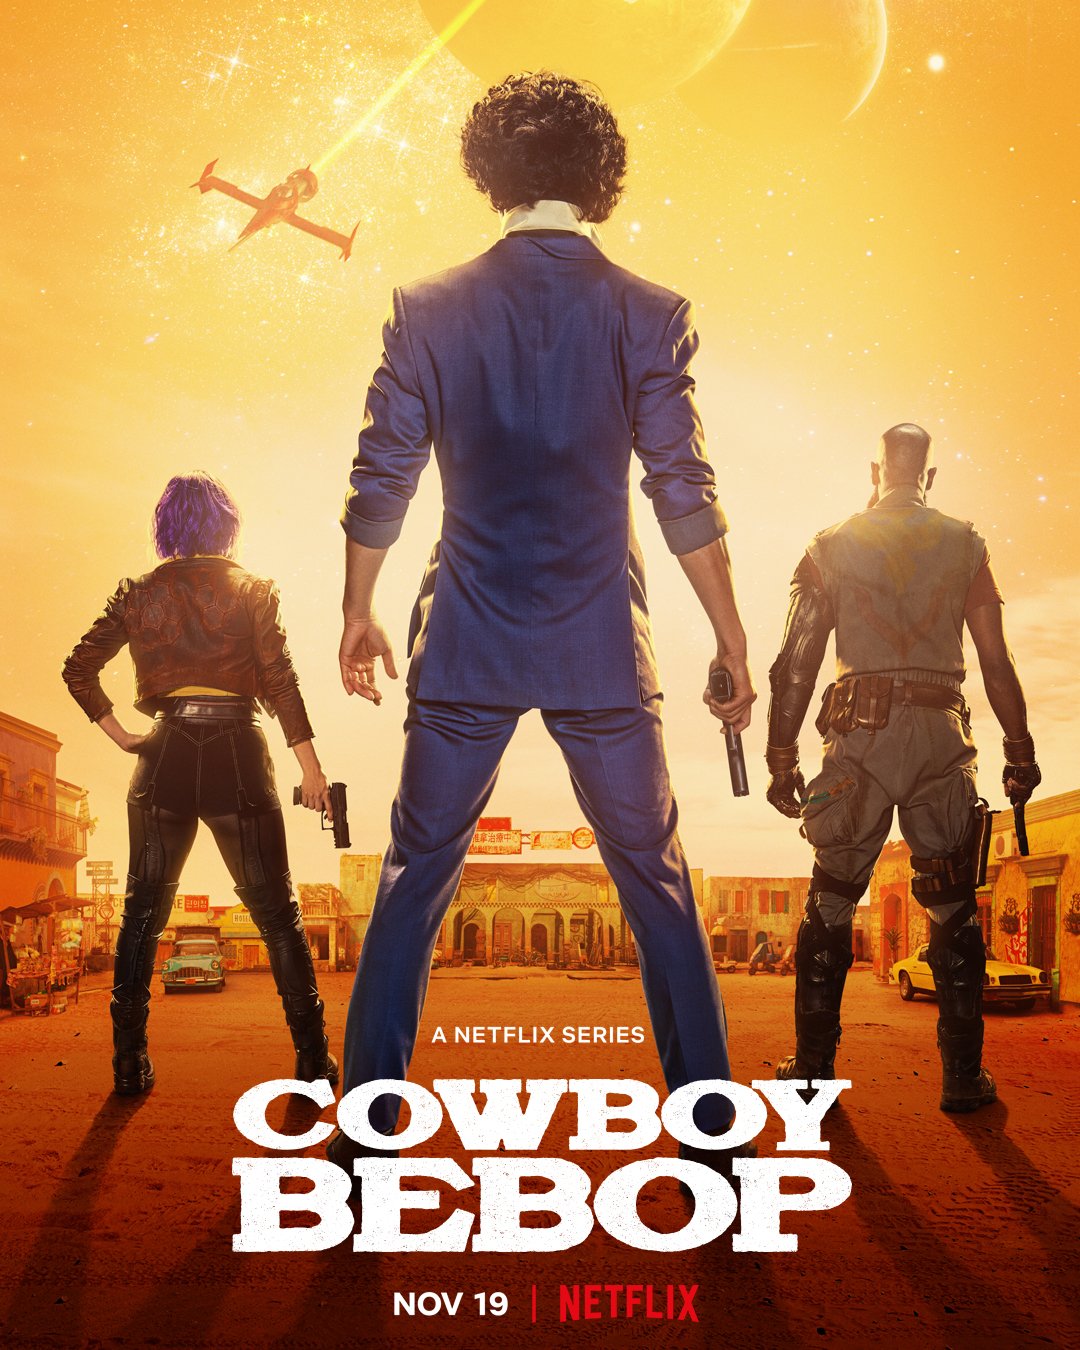 Netflix Acquires Rights to Original Cowboy Bebop Anime